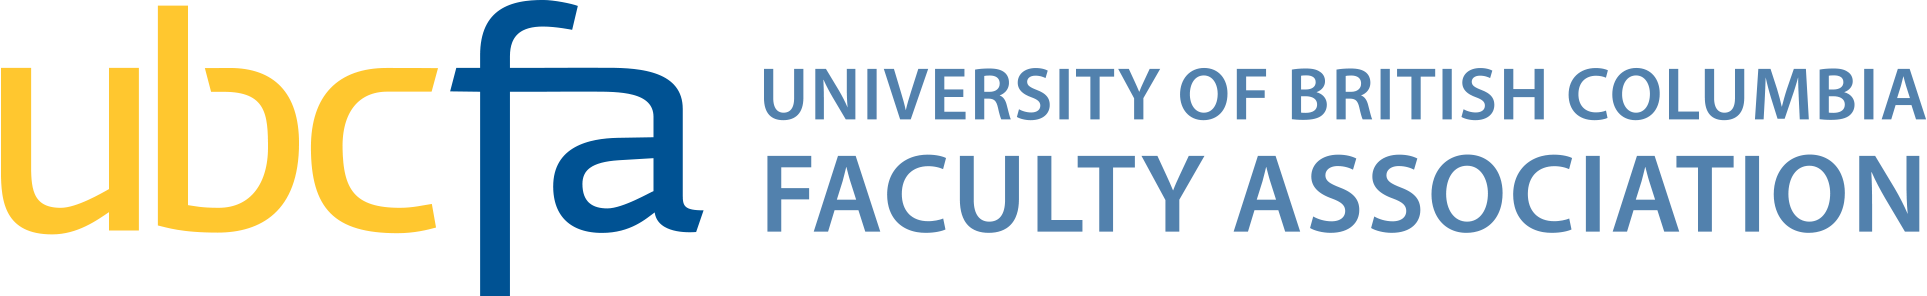 University of British Columbia Faculty Association